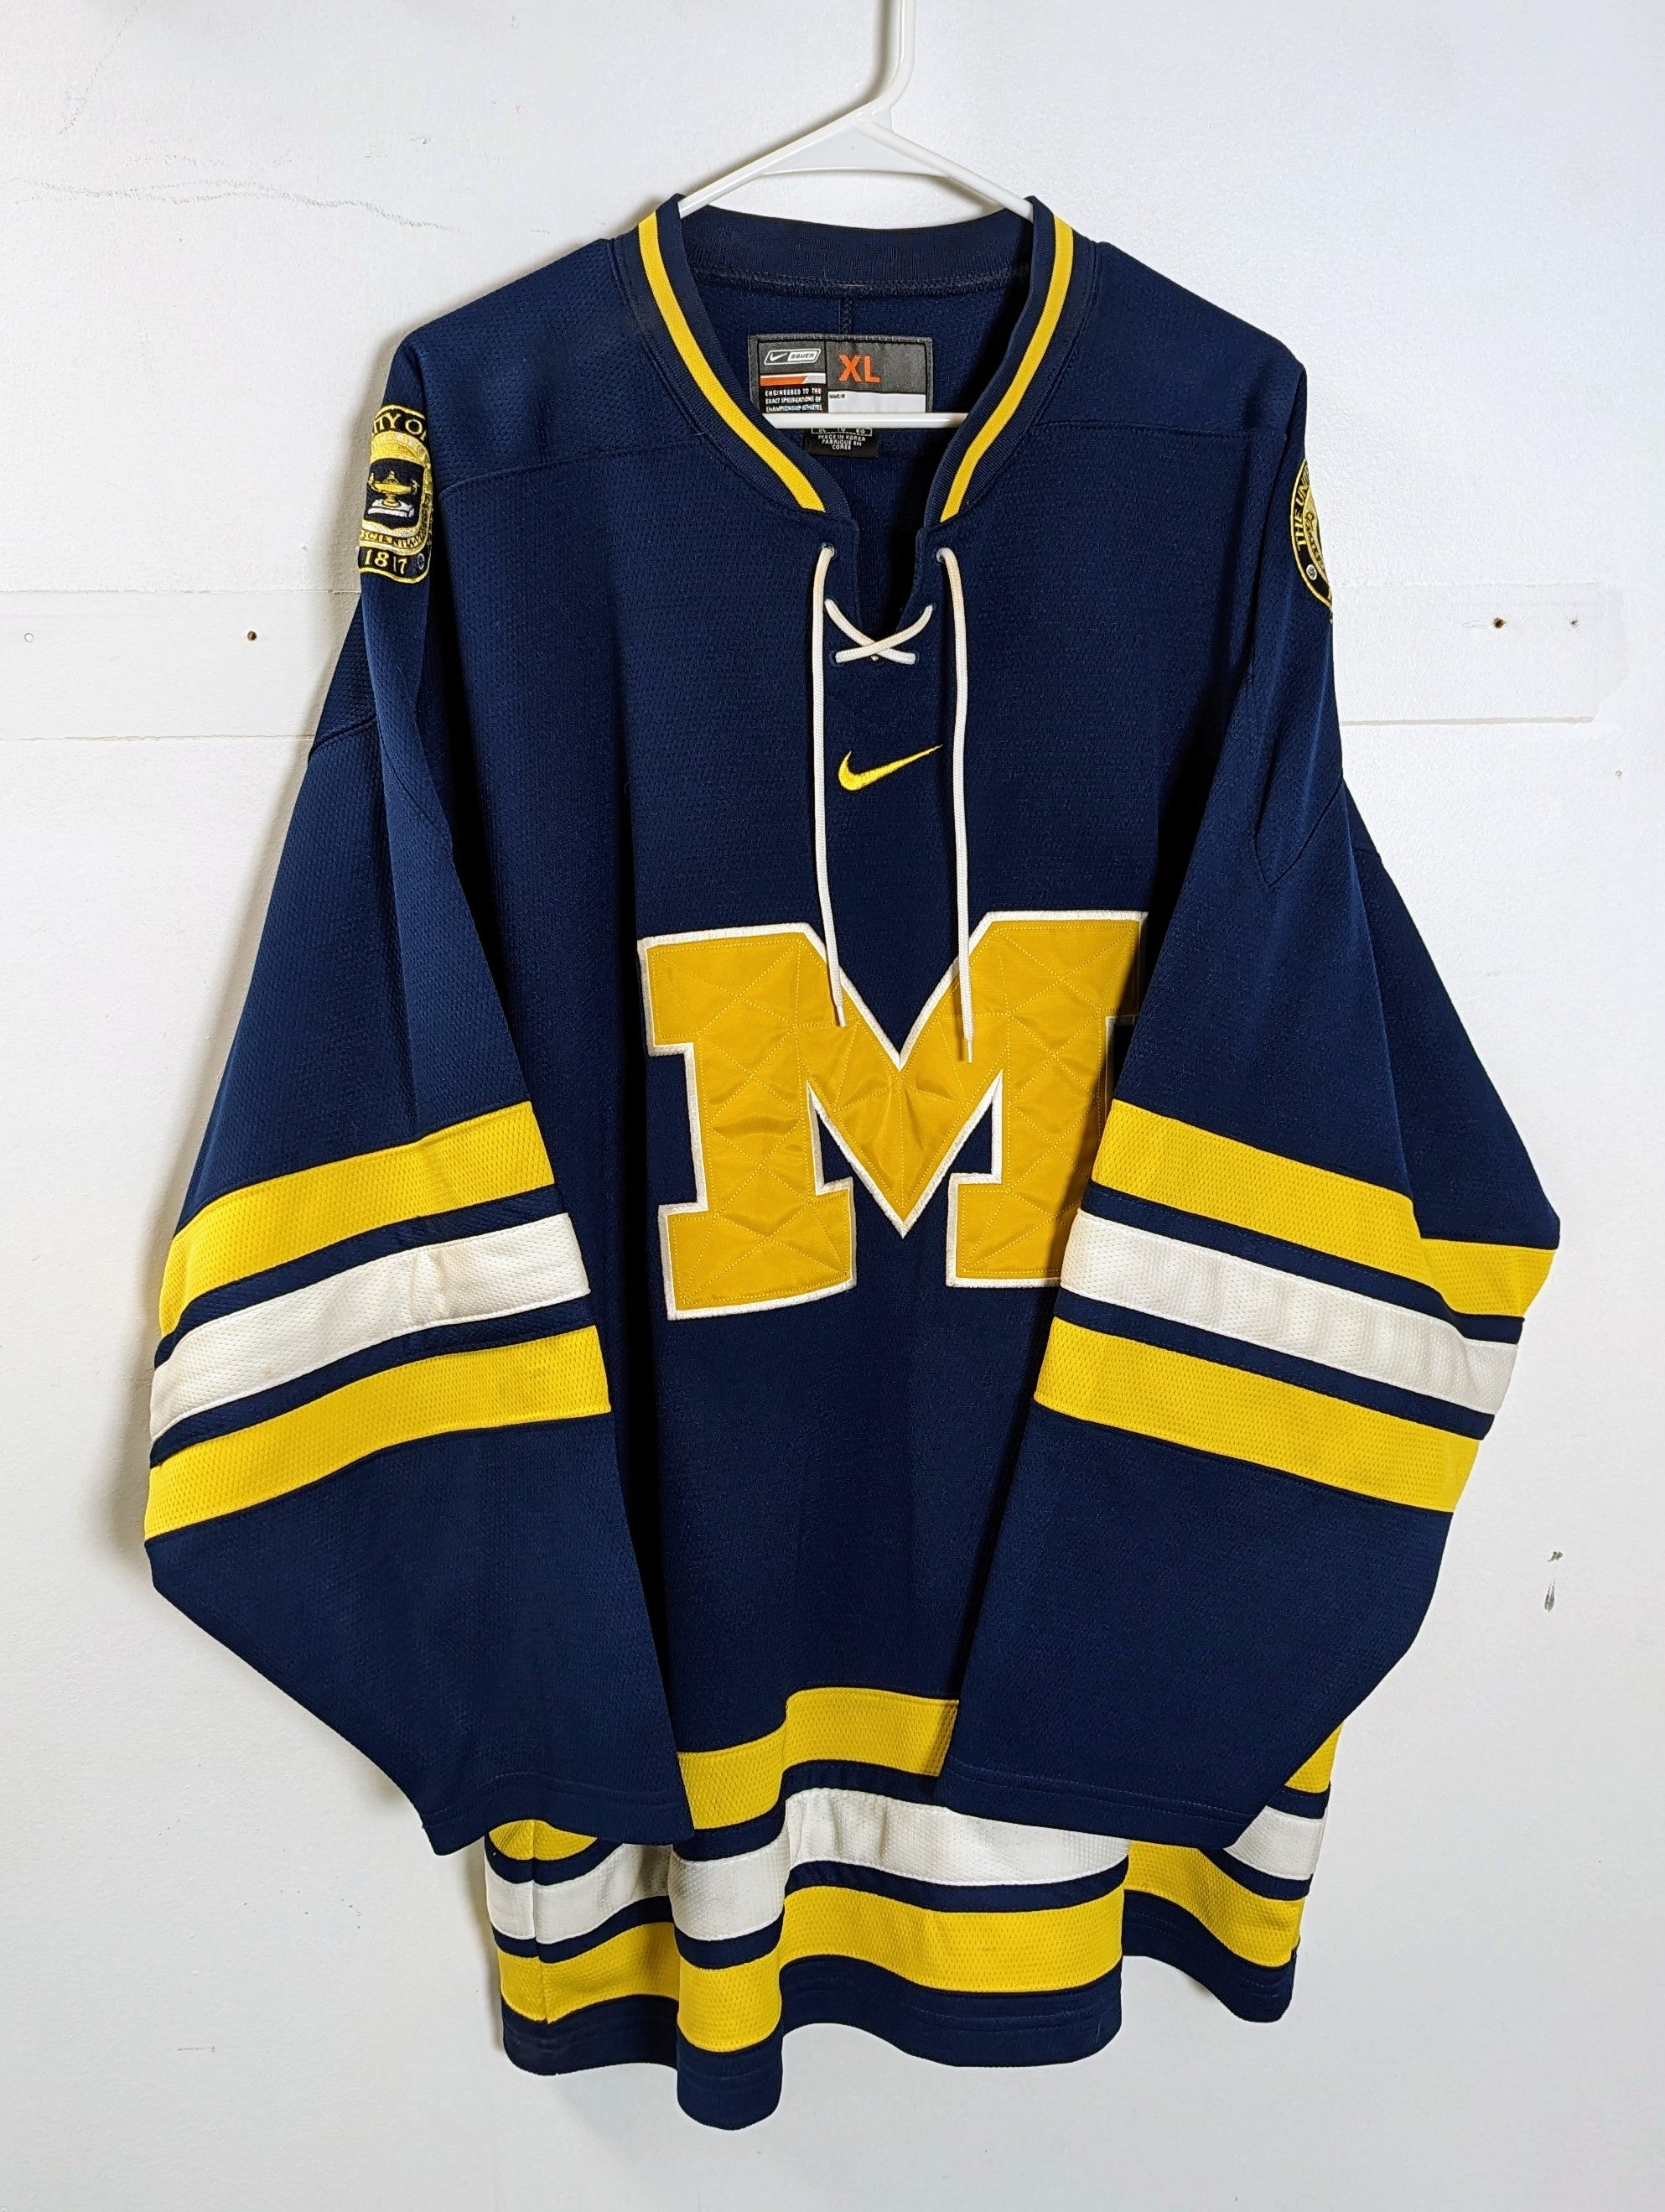 University of Michigan Hockey Jersey.